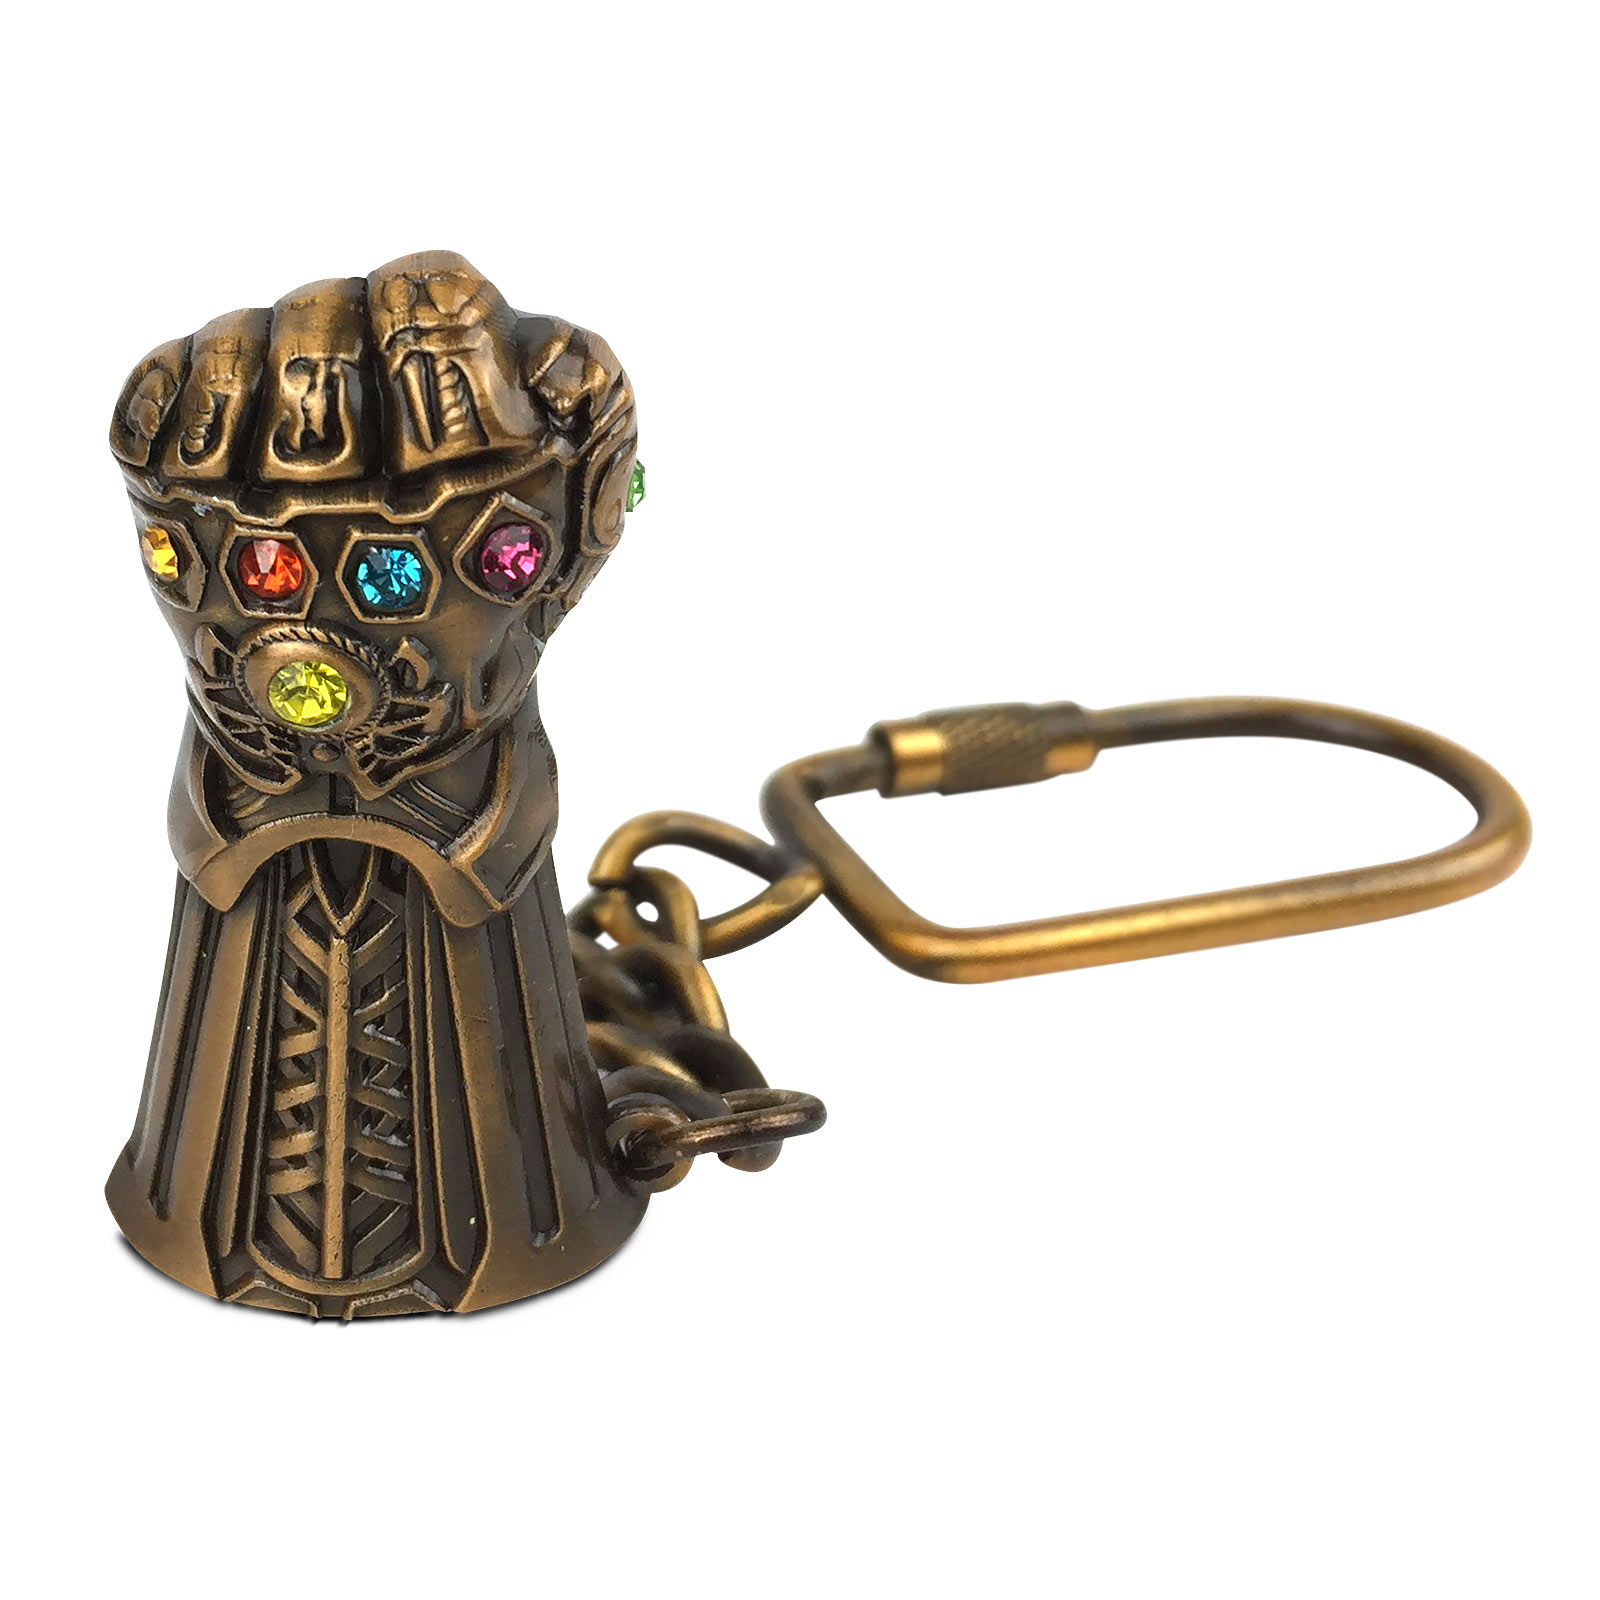 Avengers - Thanos Infinity Gauntlet Schlüsselanhänger